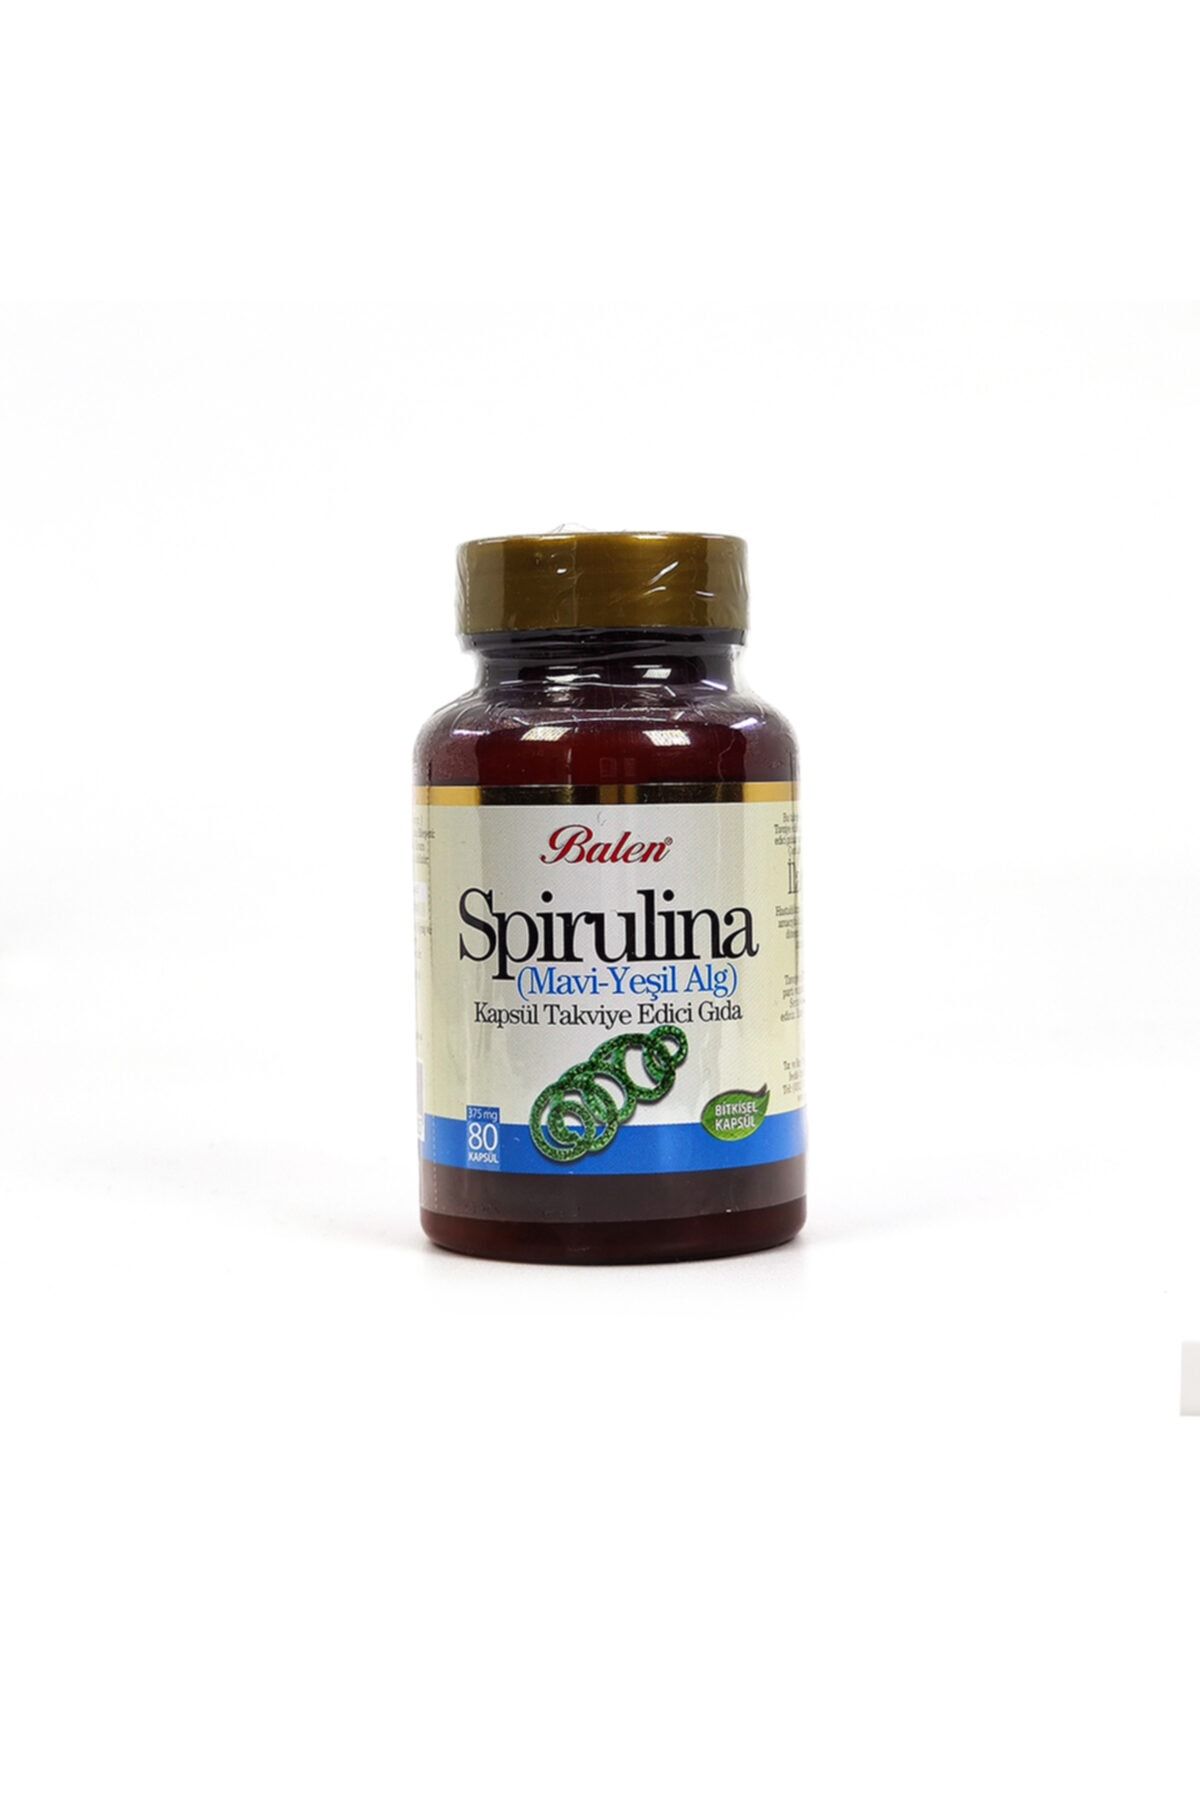 Balen Spirulina Mavi-yeşil Alg Hapı 80 Kapsül X 375 mg